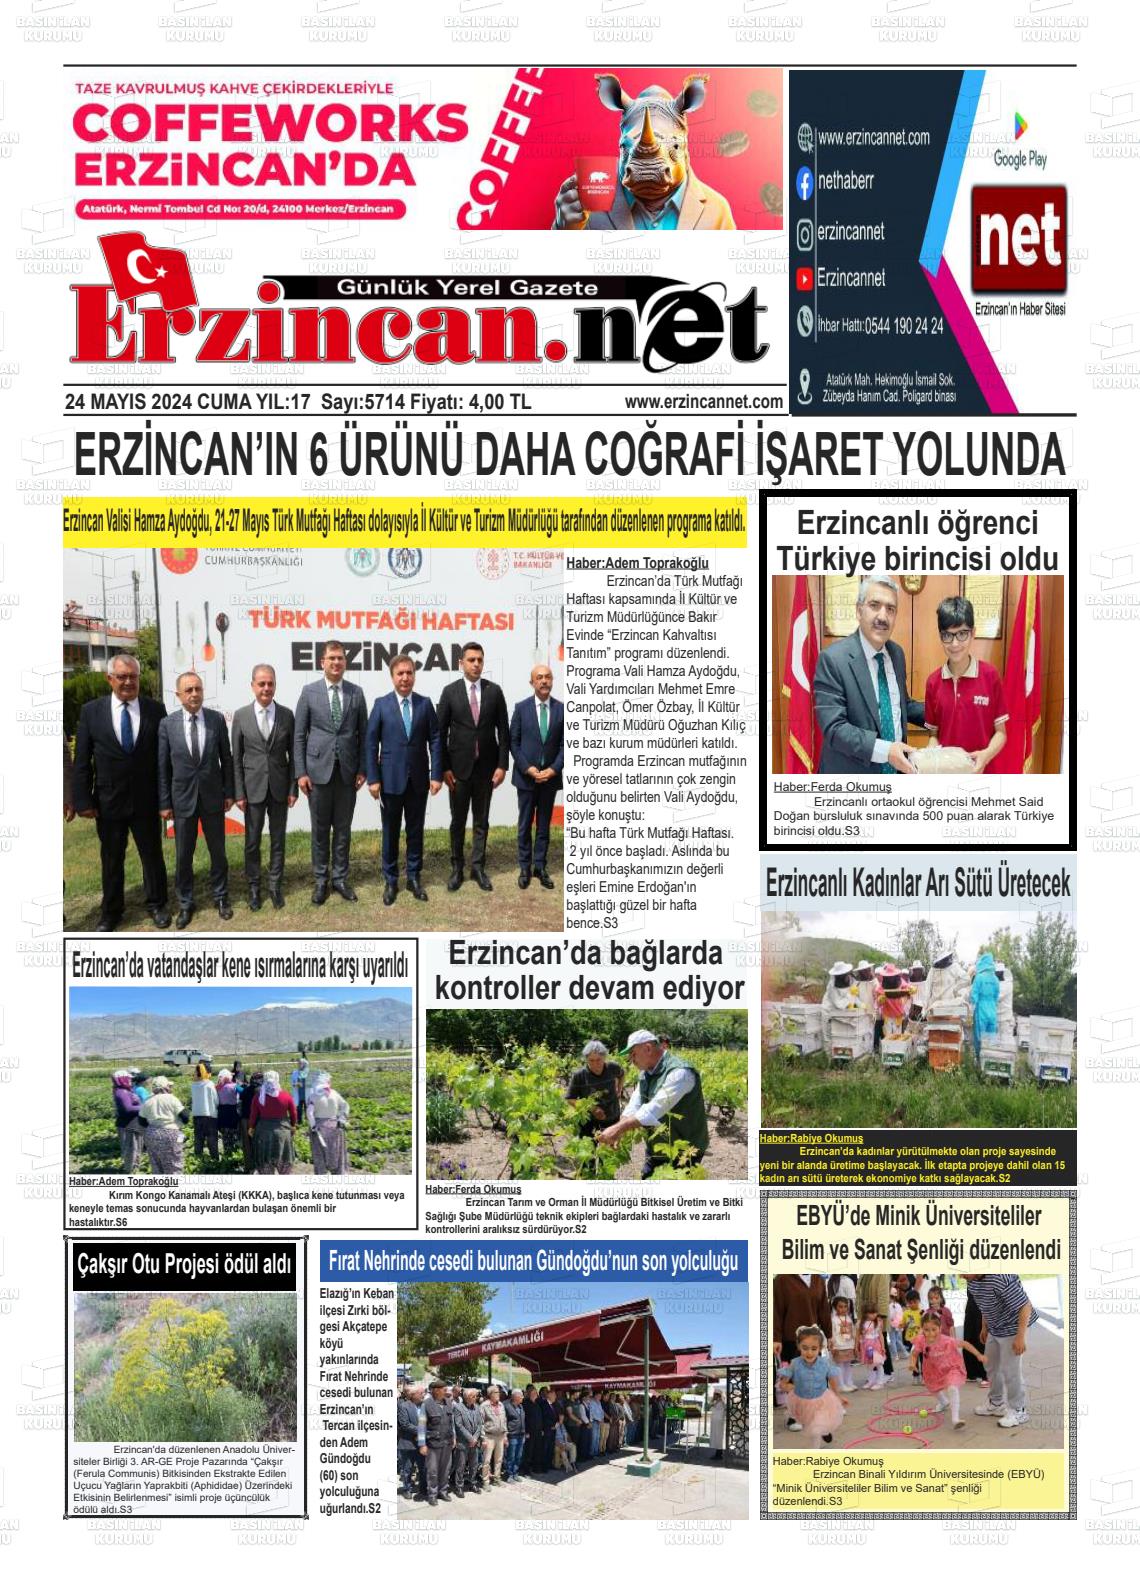 ERZİNCAN NET Gazetesi